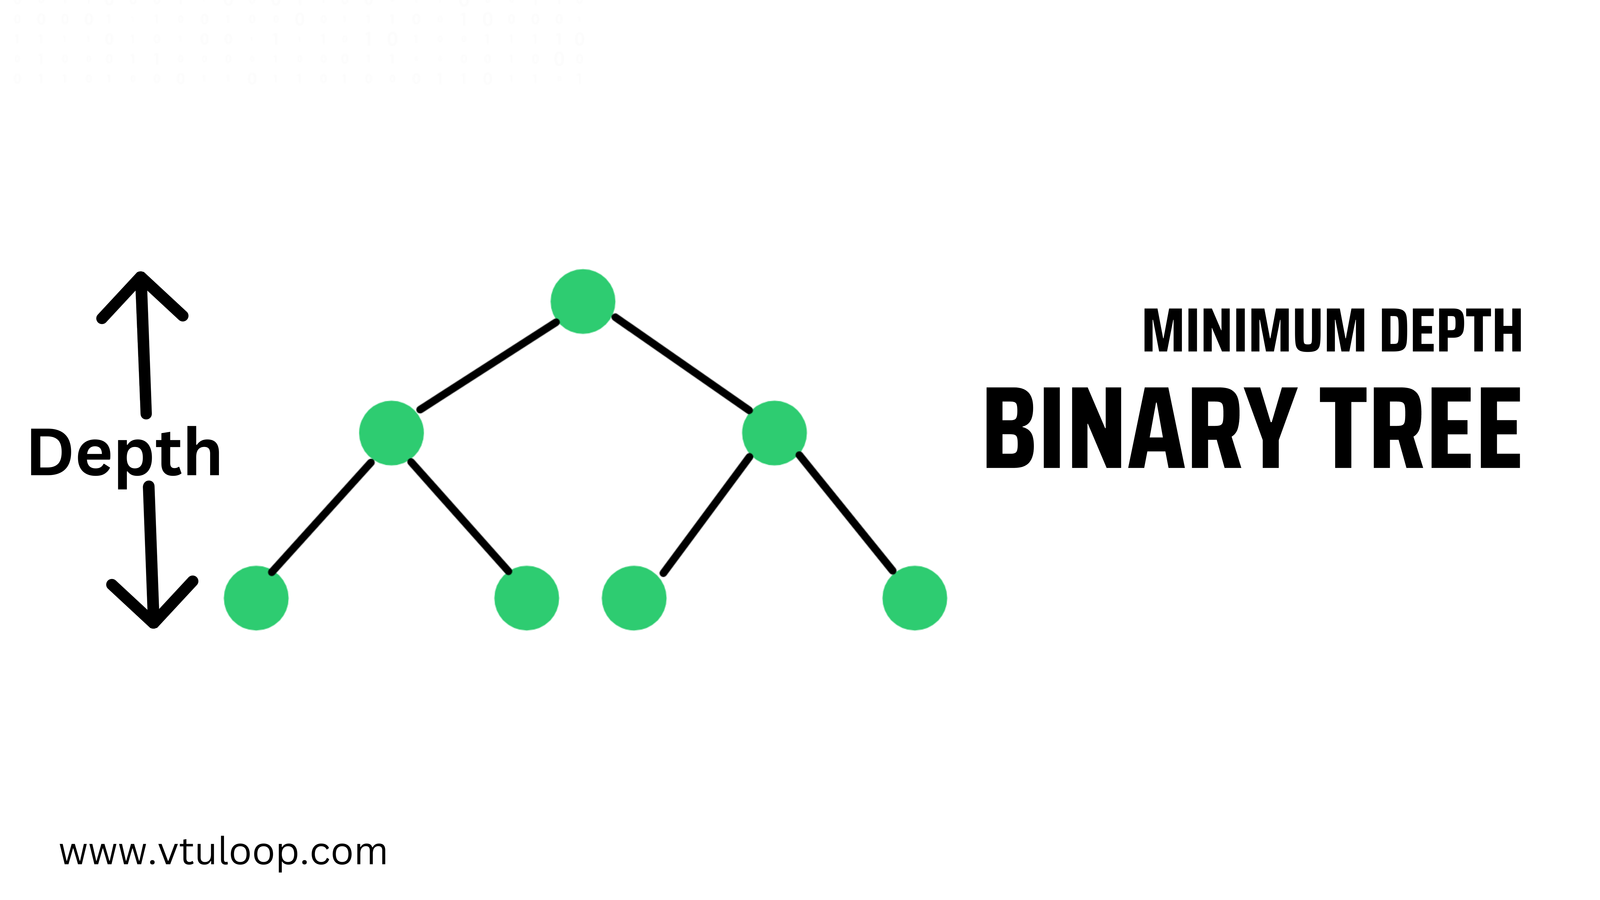 Minimum depth binary tree